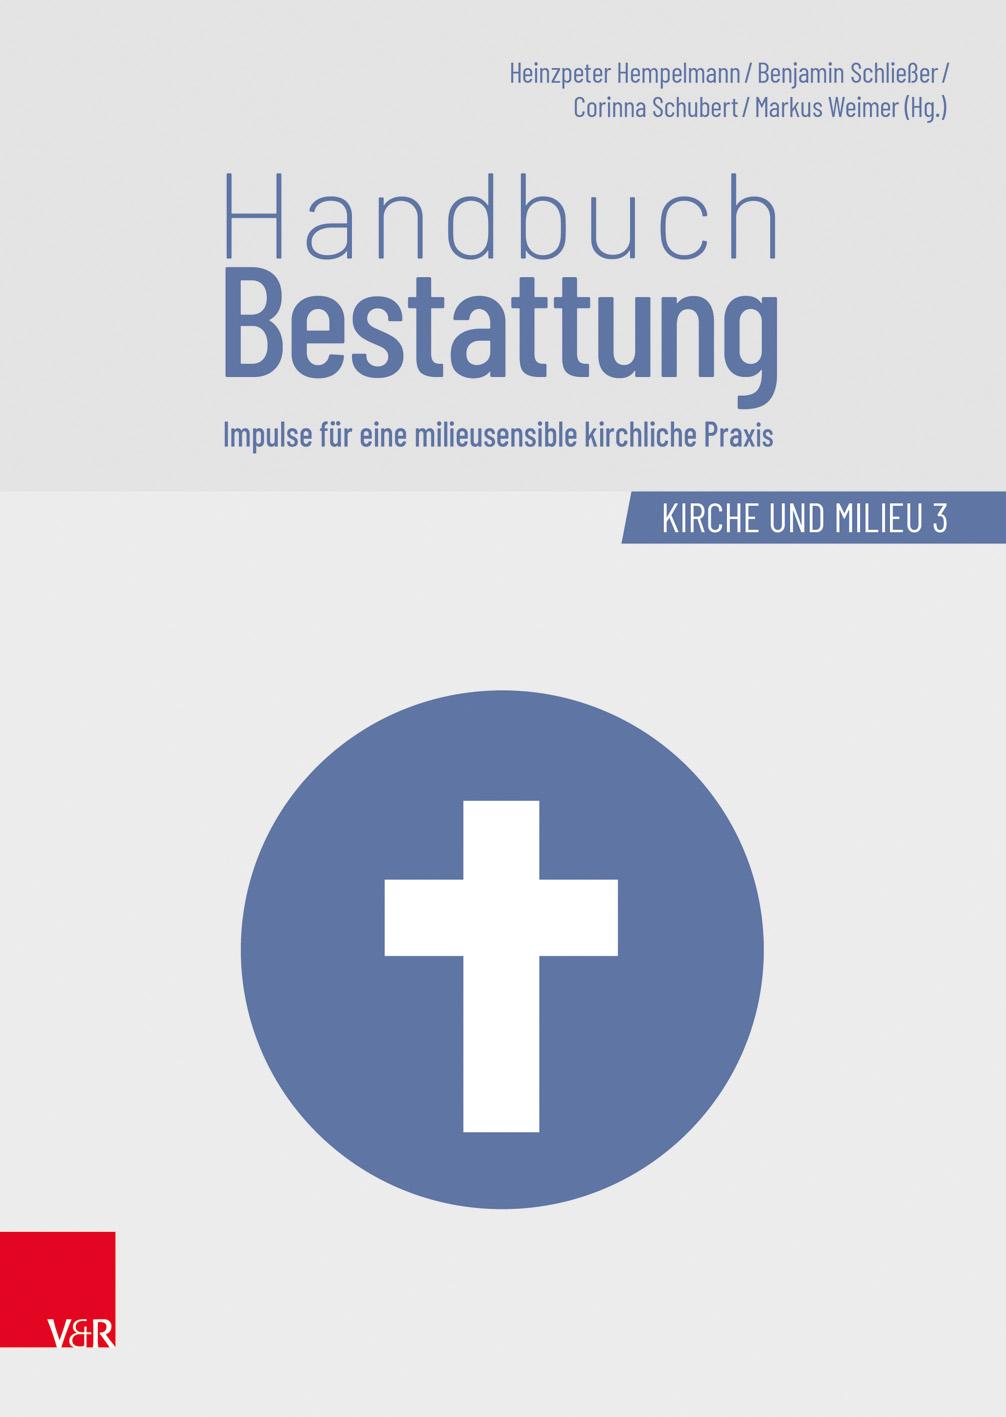 Handbuch Bestattung - Hempelmann, Heinzpeter|Schließer, Benjamin|Schubert, Corinna|Weimer, Markus